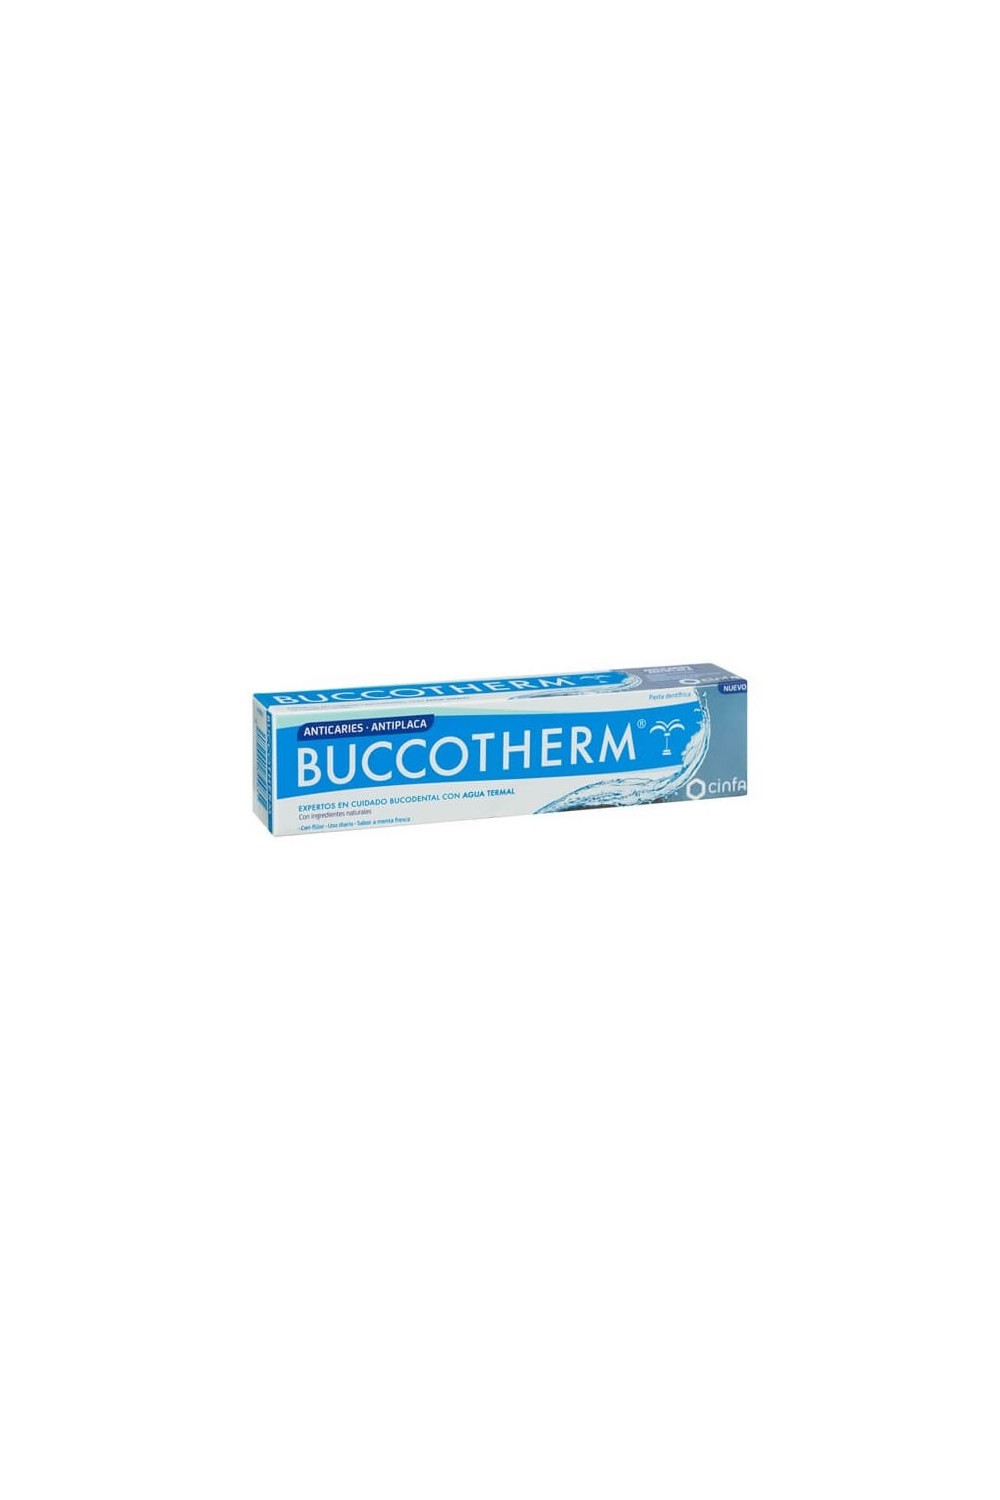 CINFA - Buccotherm Anti-Cavity Paste 75ml